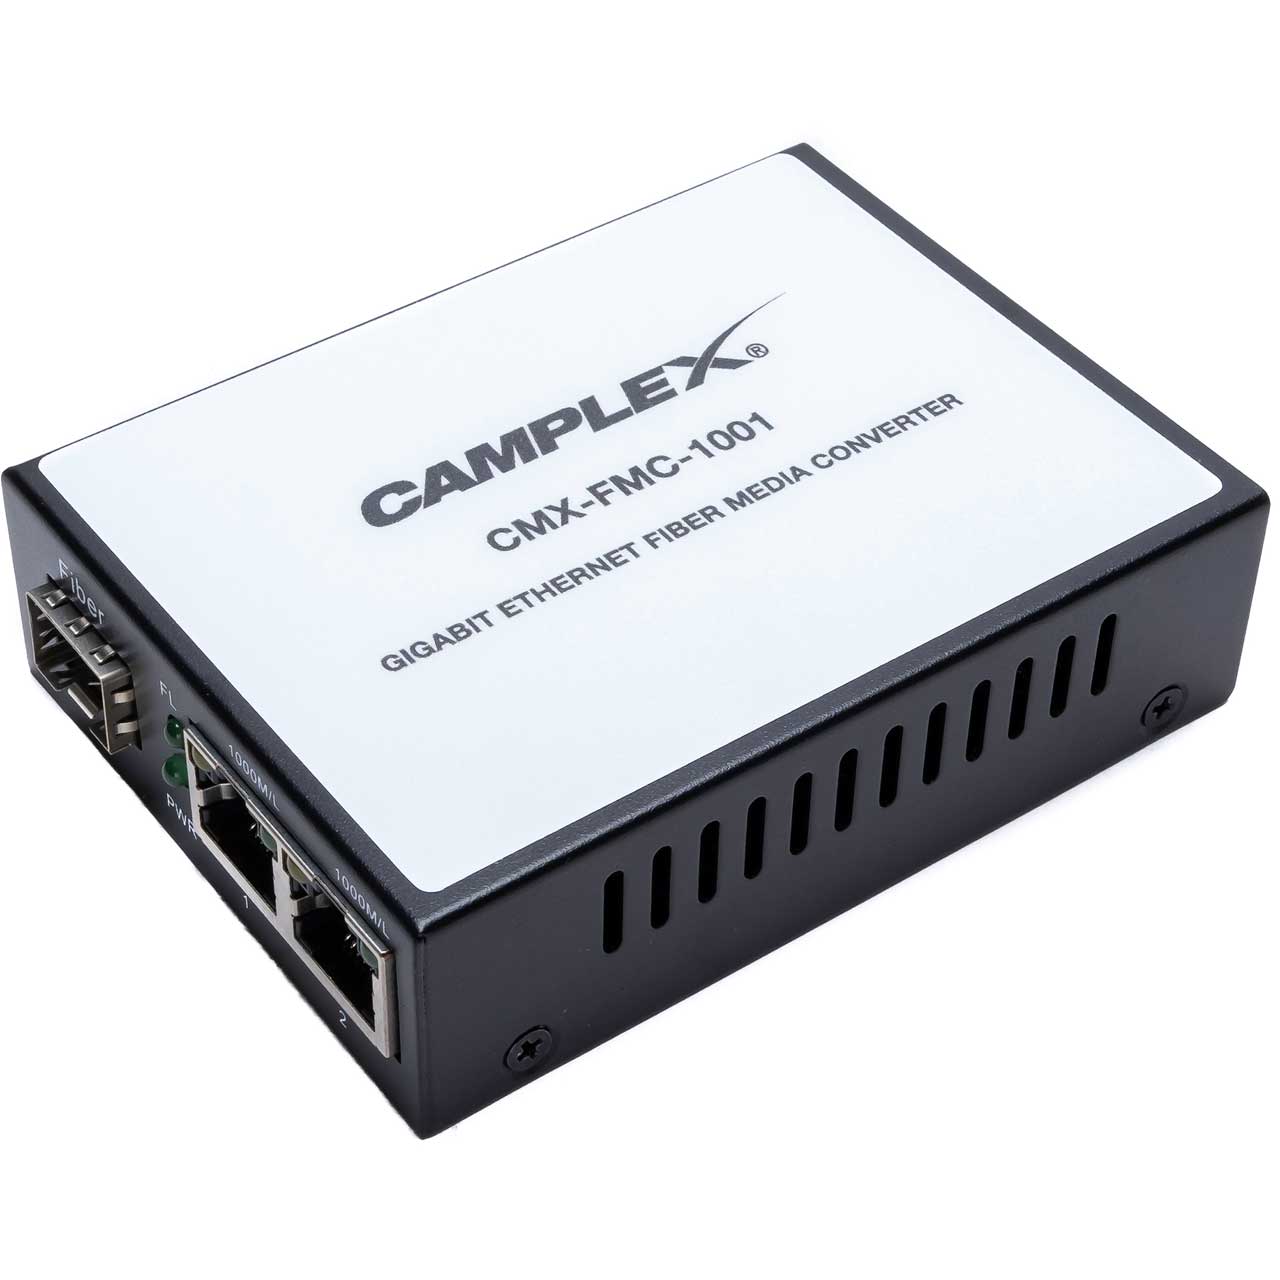 Camplex Fiber Media Converter Gigabit Ethernet 1000Base-T to 1000Base-SX/LX SFP - BStock Unit Cosmetic Blemish